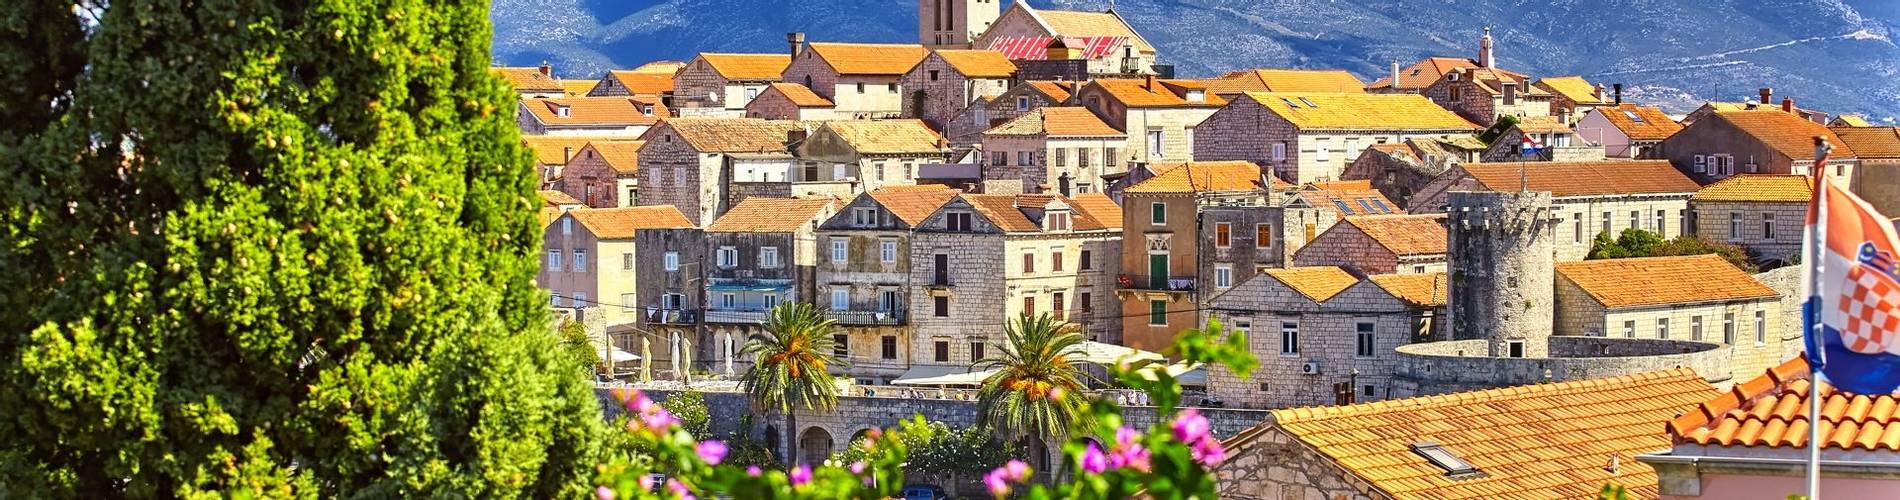 Dalmatia coast, Korcula town.jpg